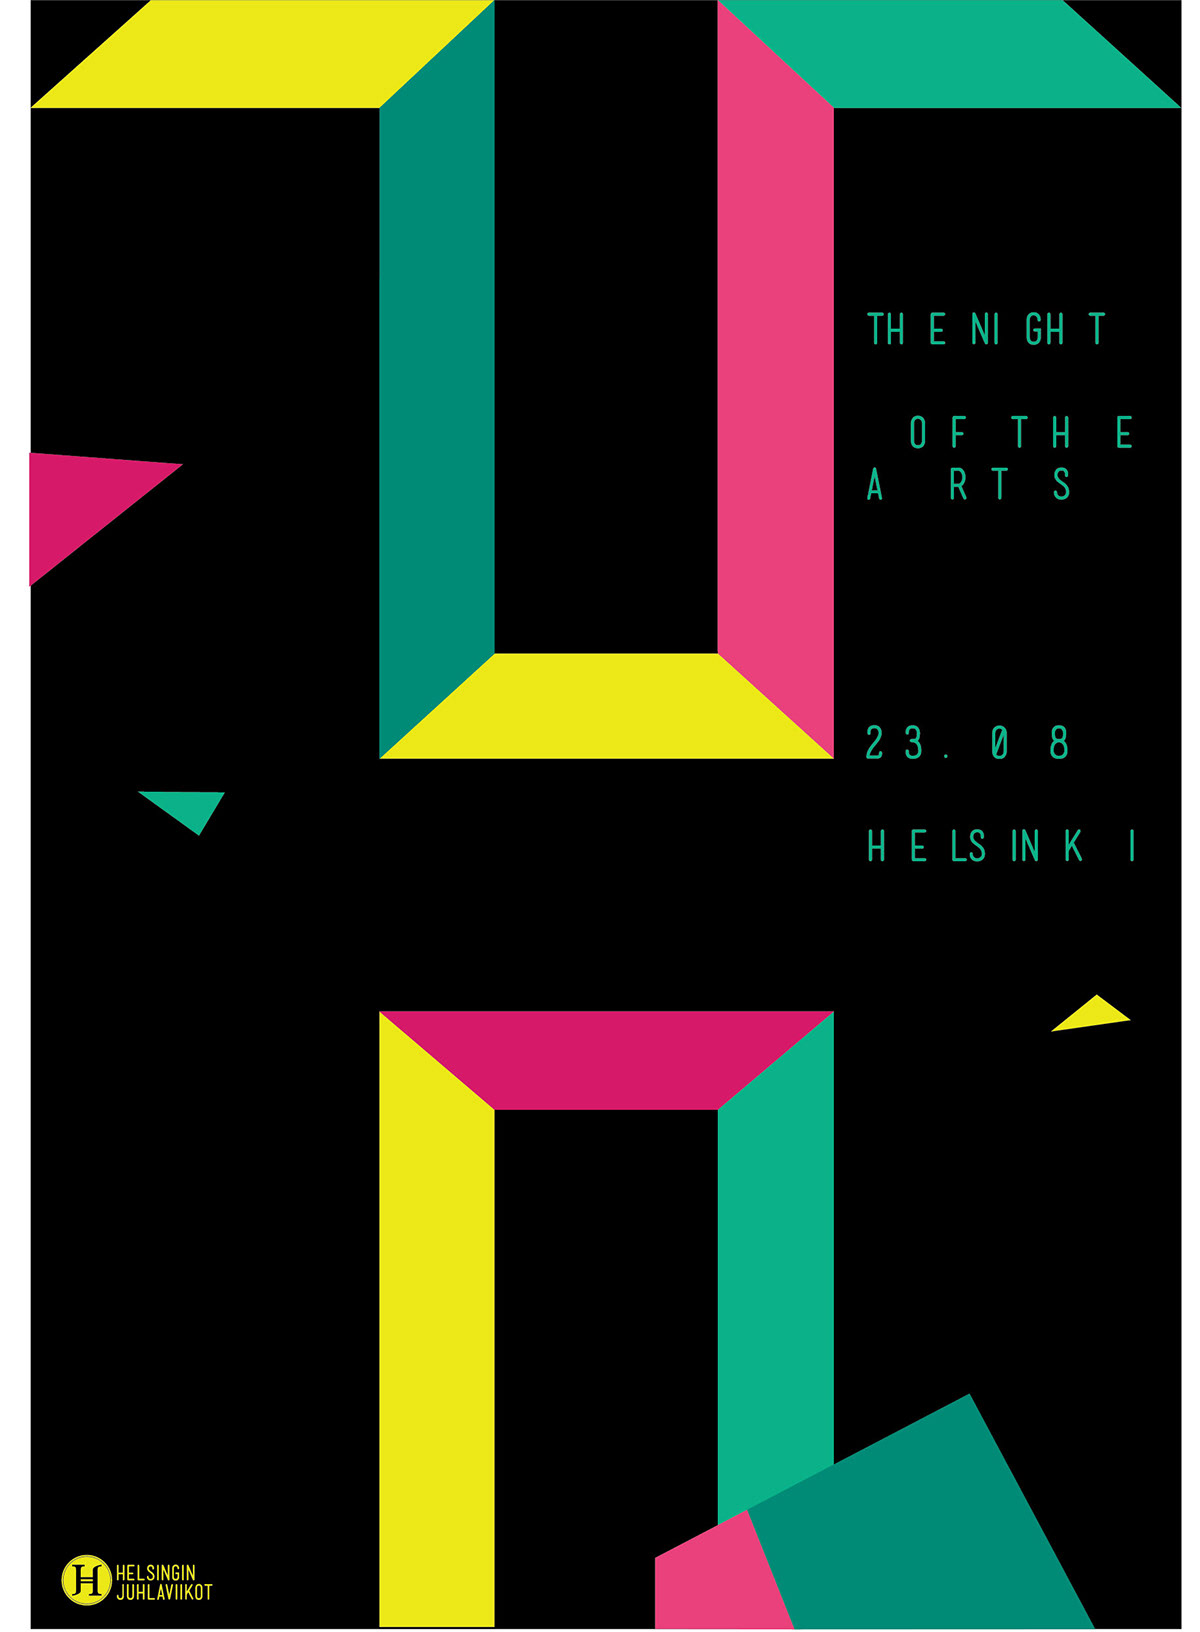 fest festival of arts art design helsinki finland night brochure poster post card pop-up diploma project ADAA madethis girl